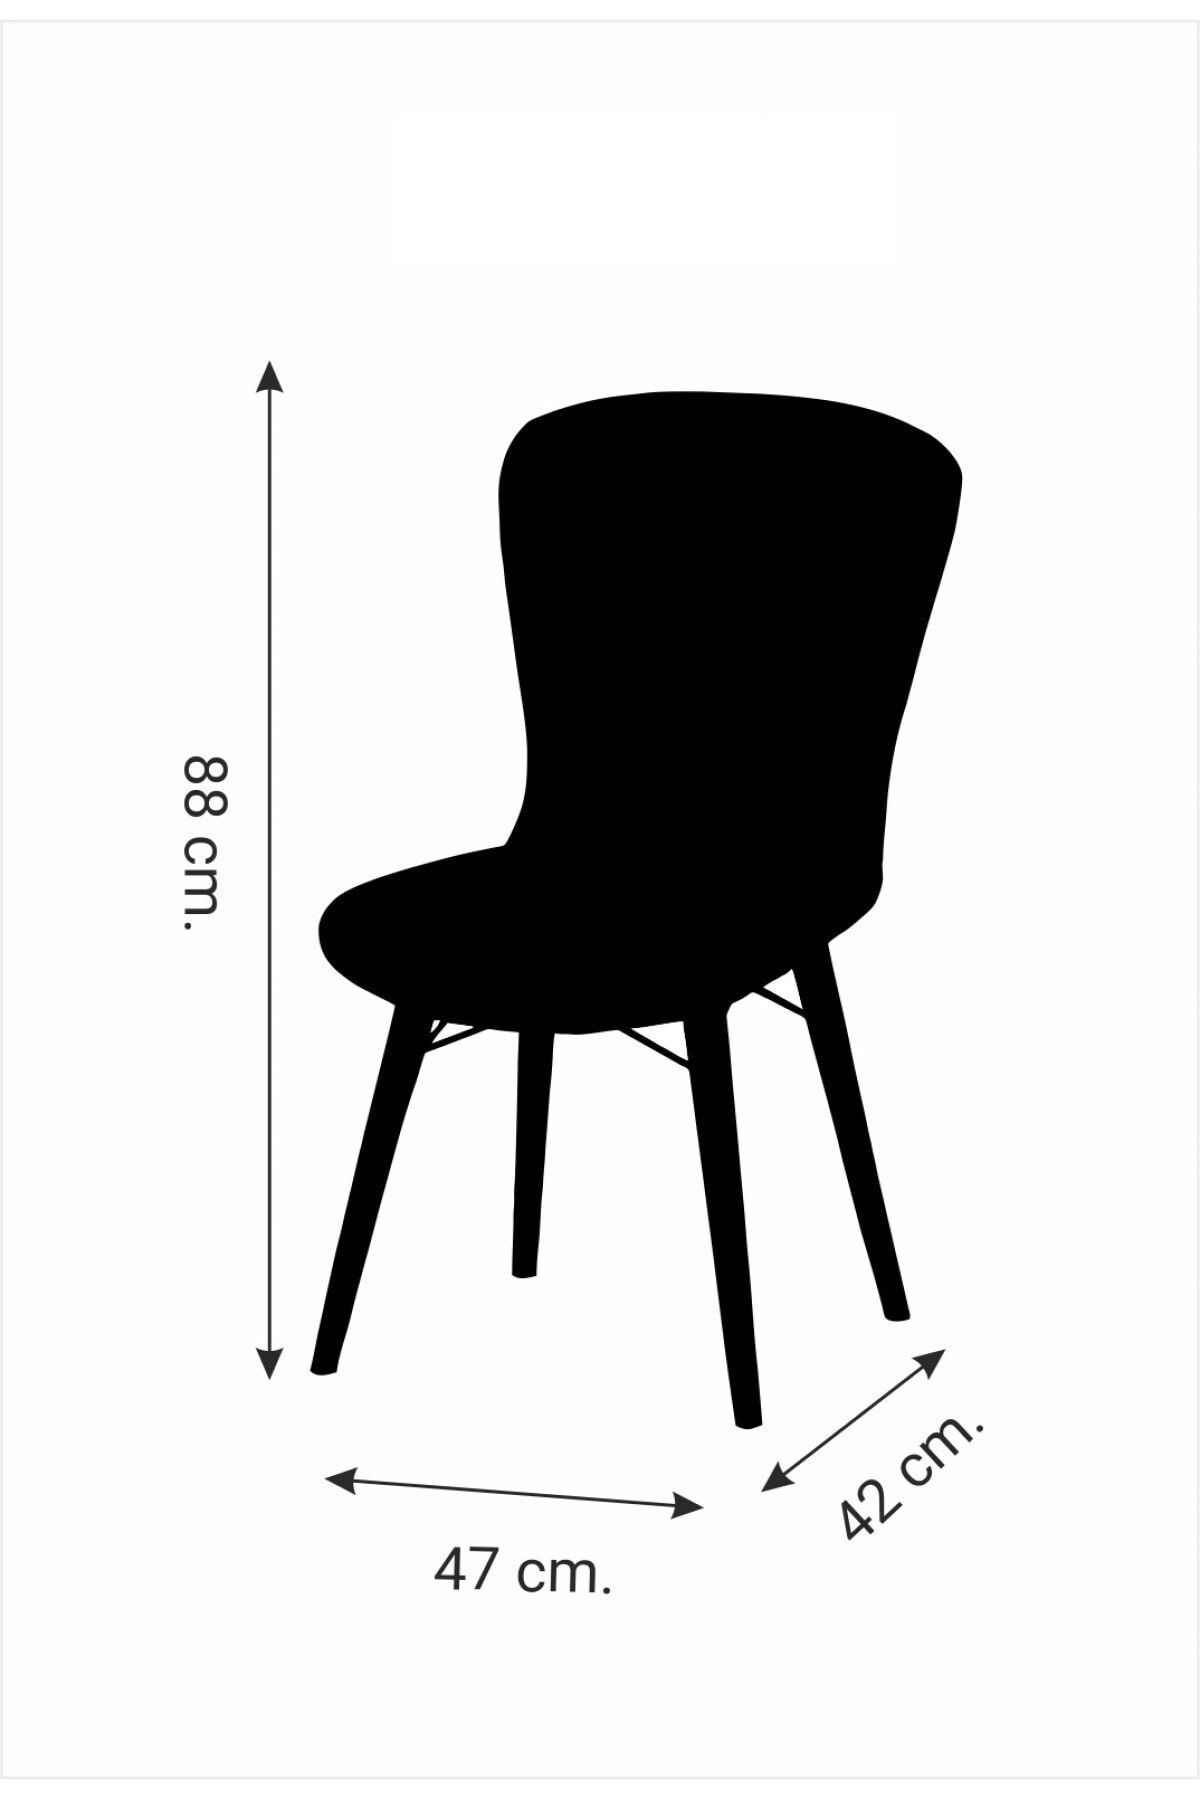 Set masa extensibila cu 4 scaune tapitate alb-turcoaz Homs cristal 130 x 80 cm